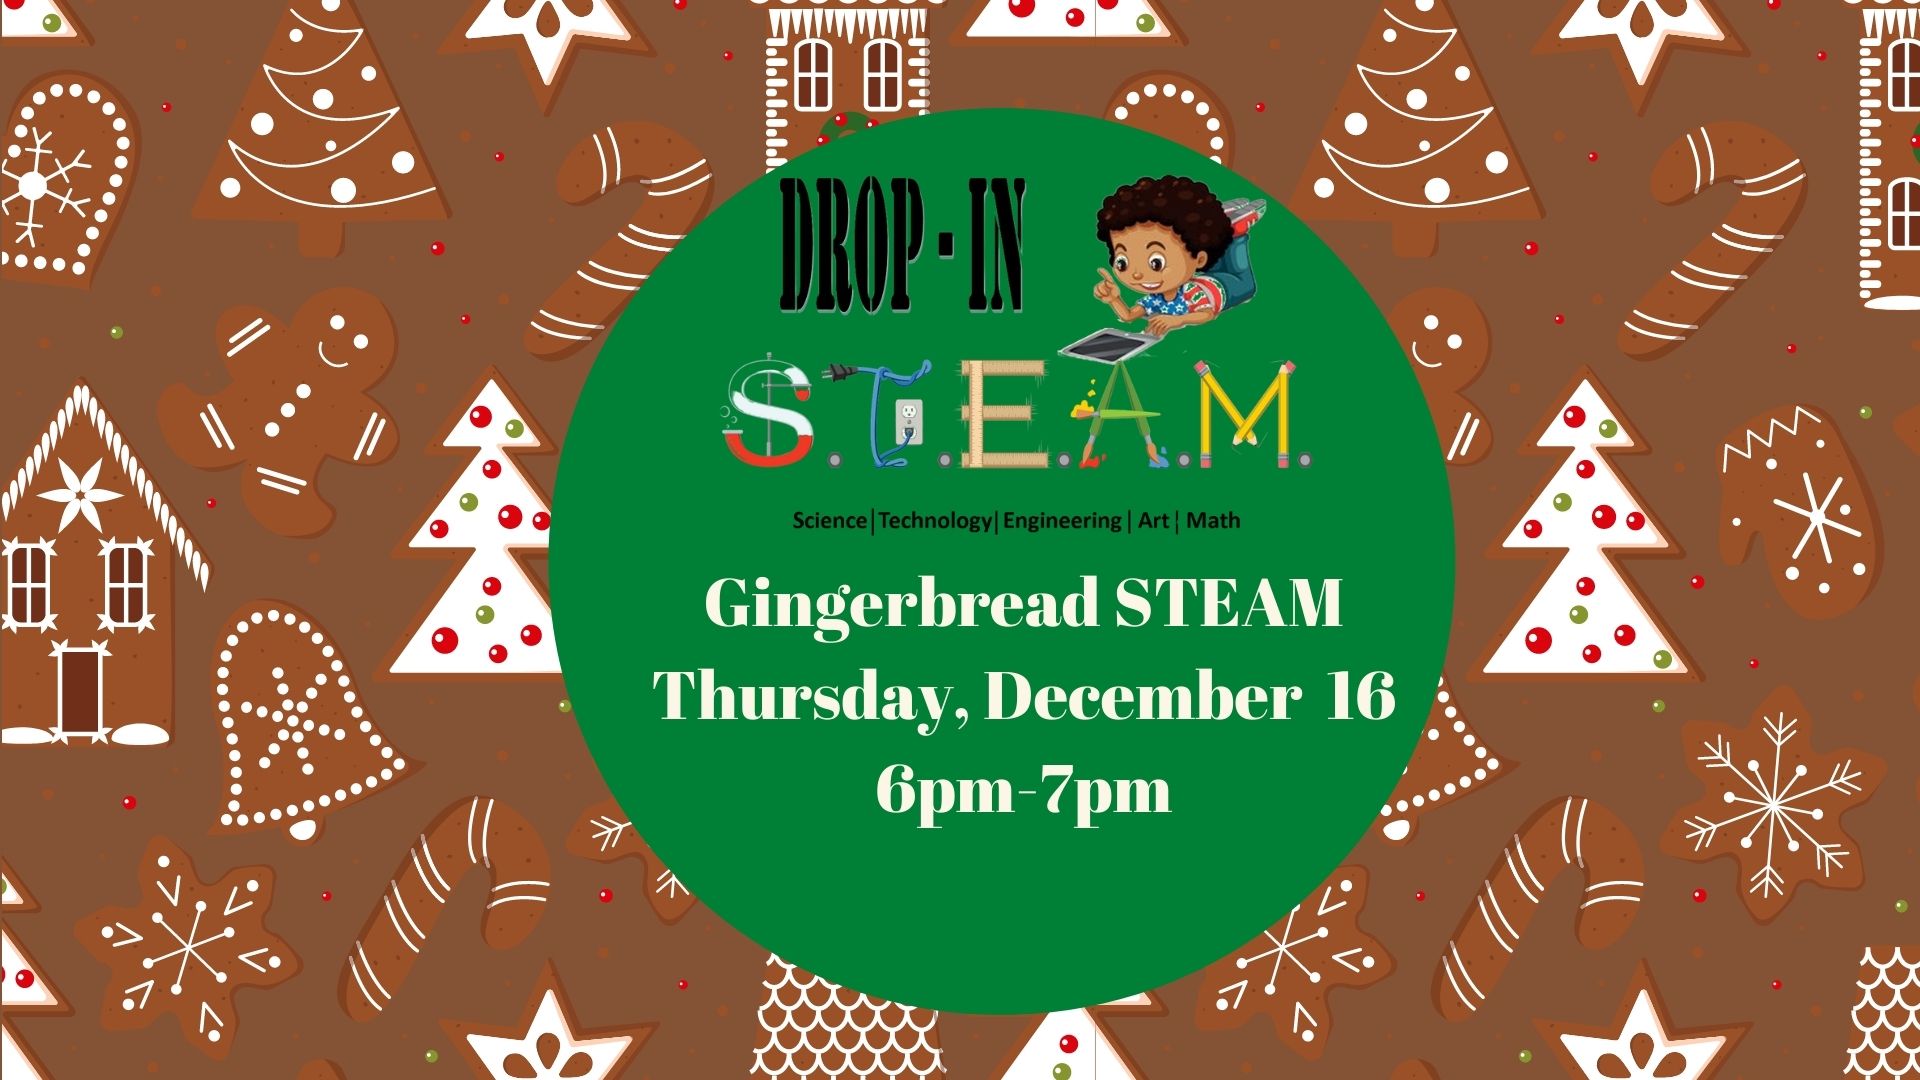 Gingerbread STEAM program flyer